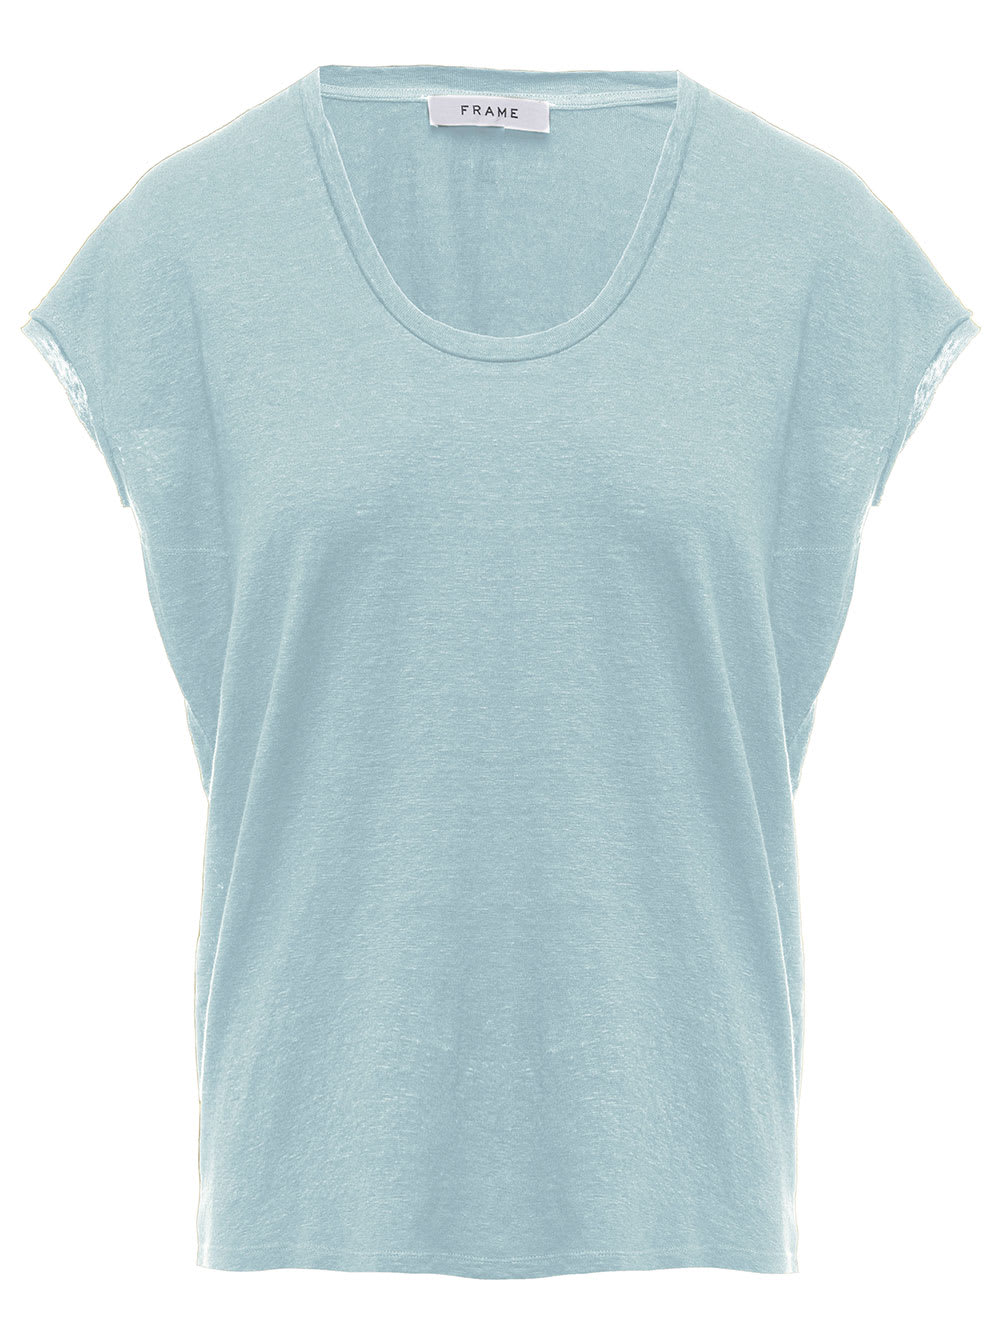 Frame Womans Basic Light Blue Linen T-shirt